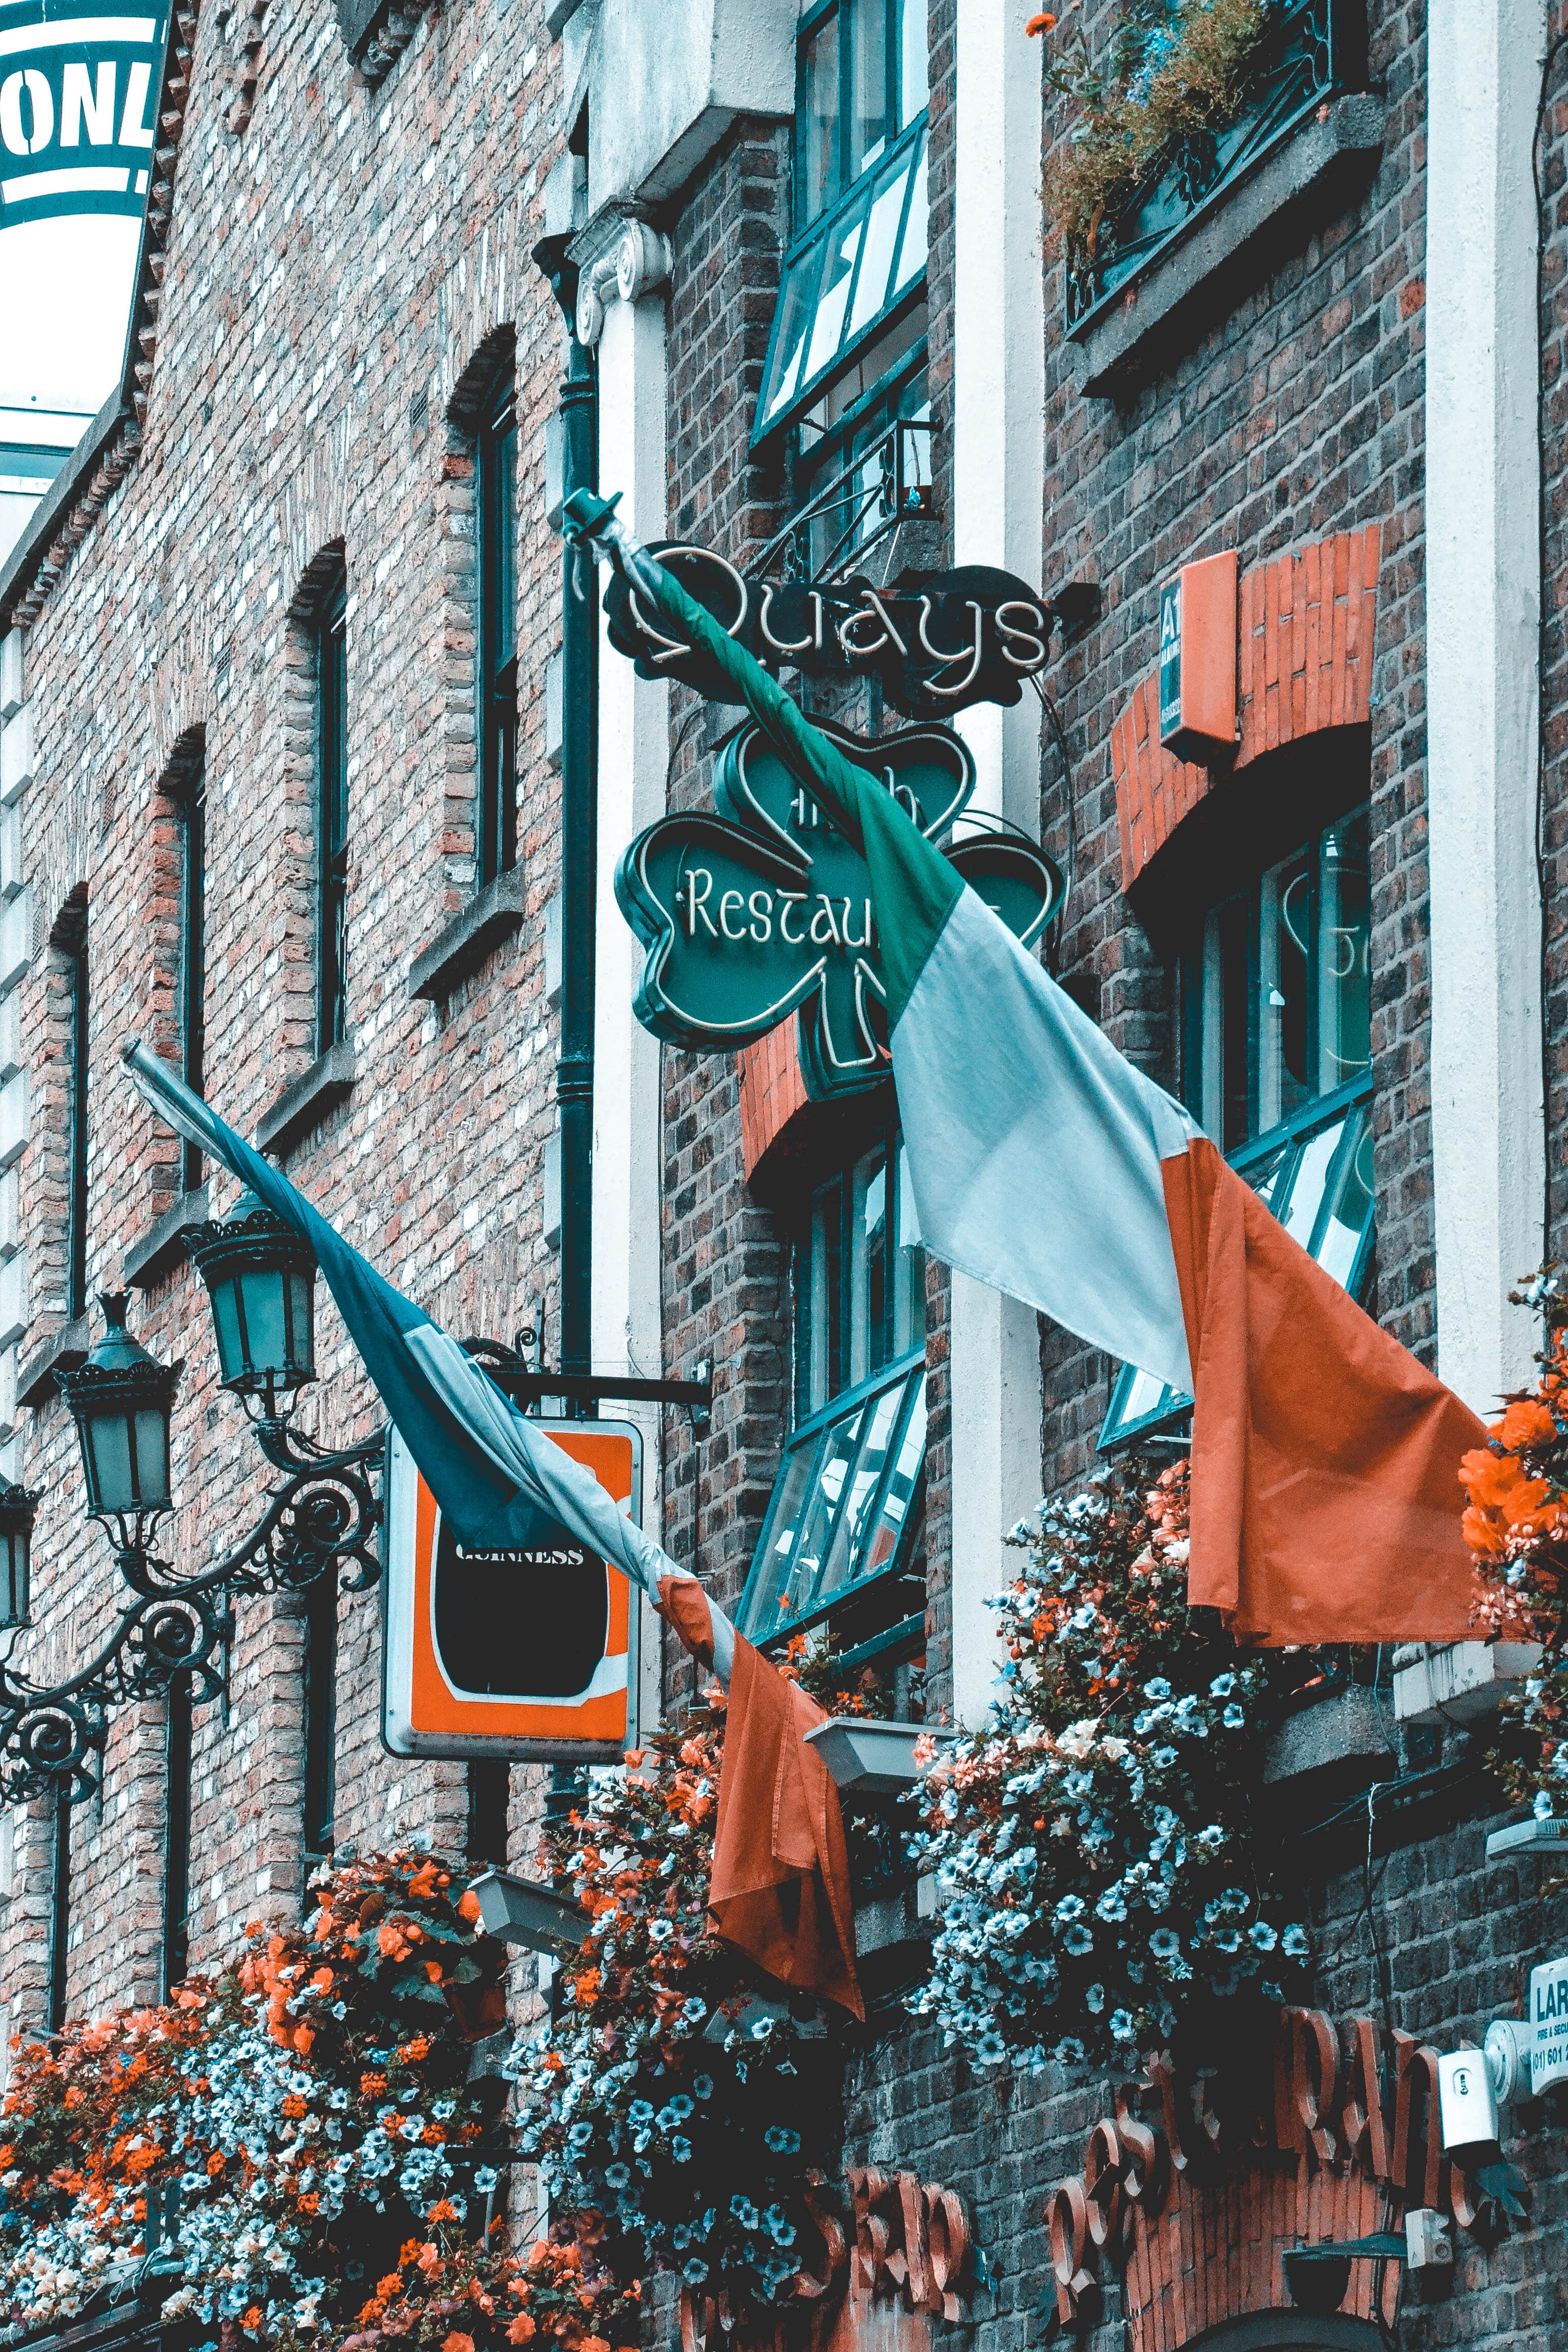 Irish pub located on the historical street in